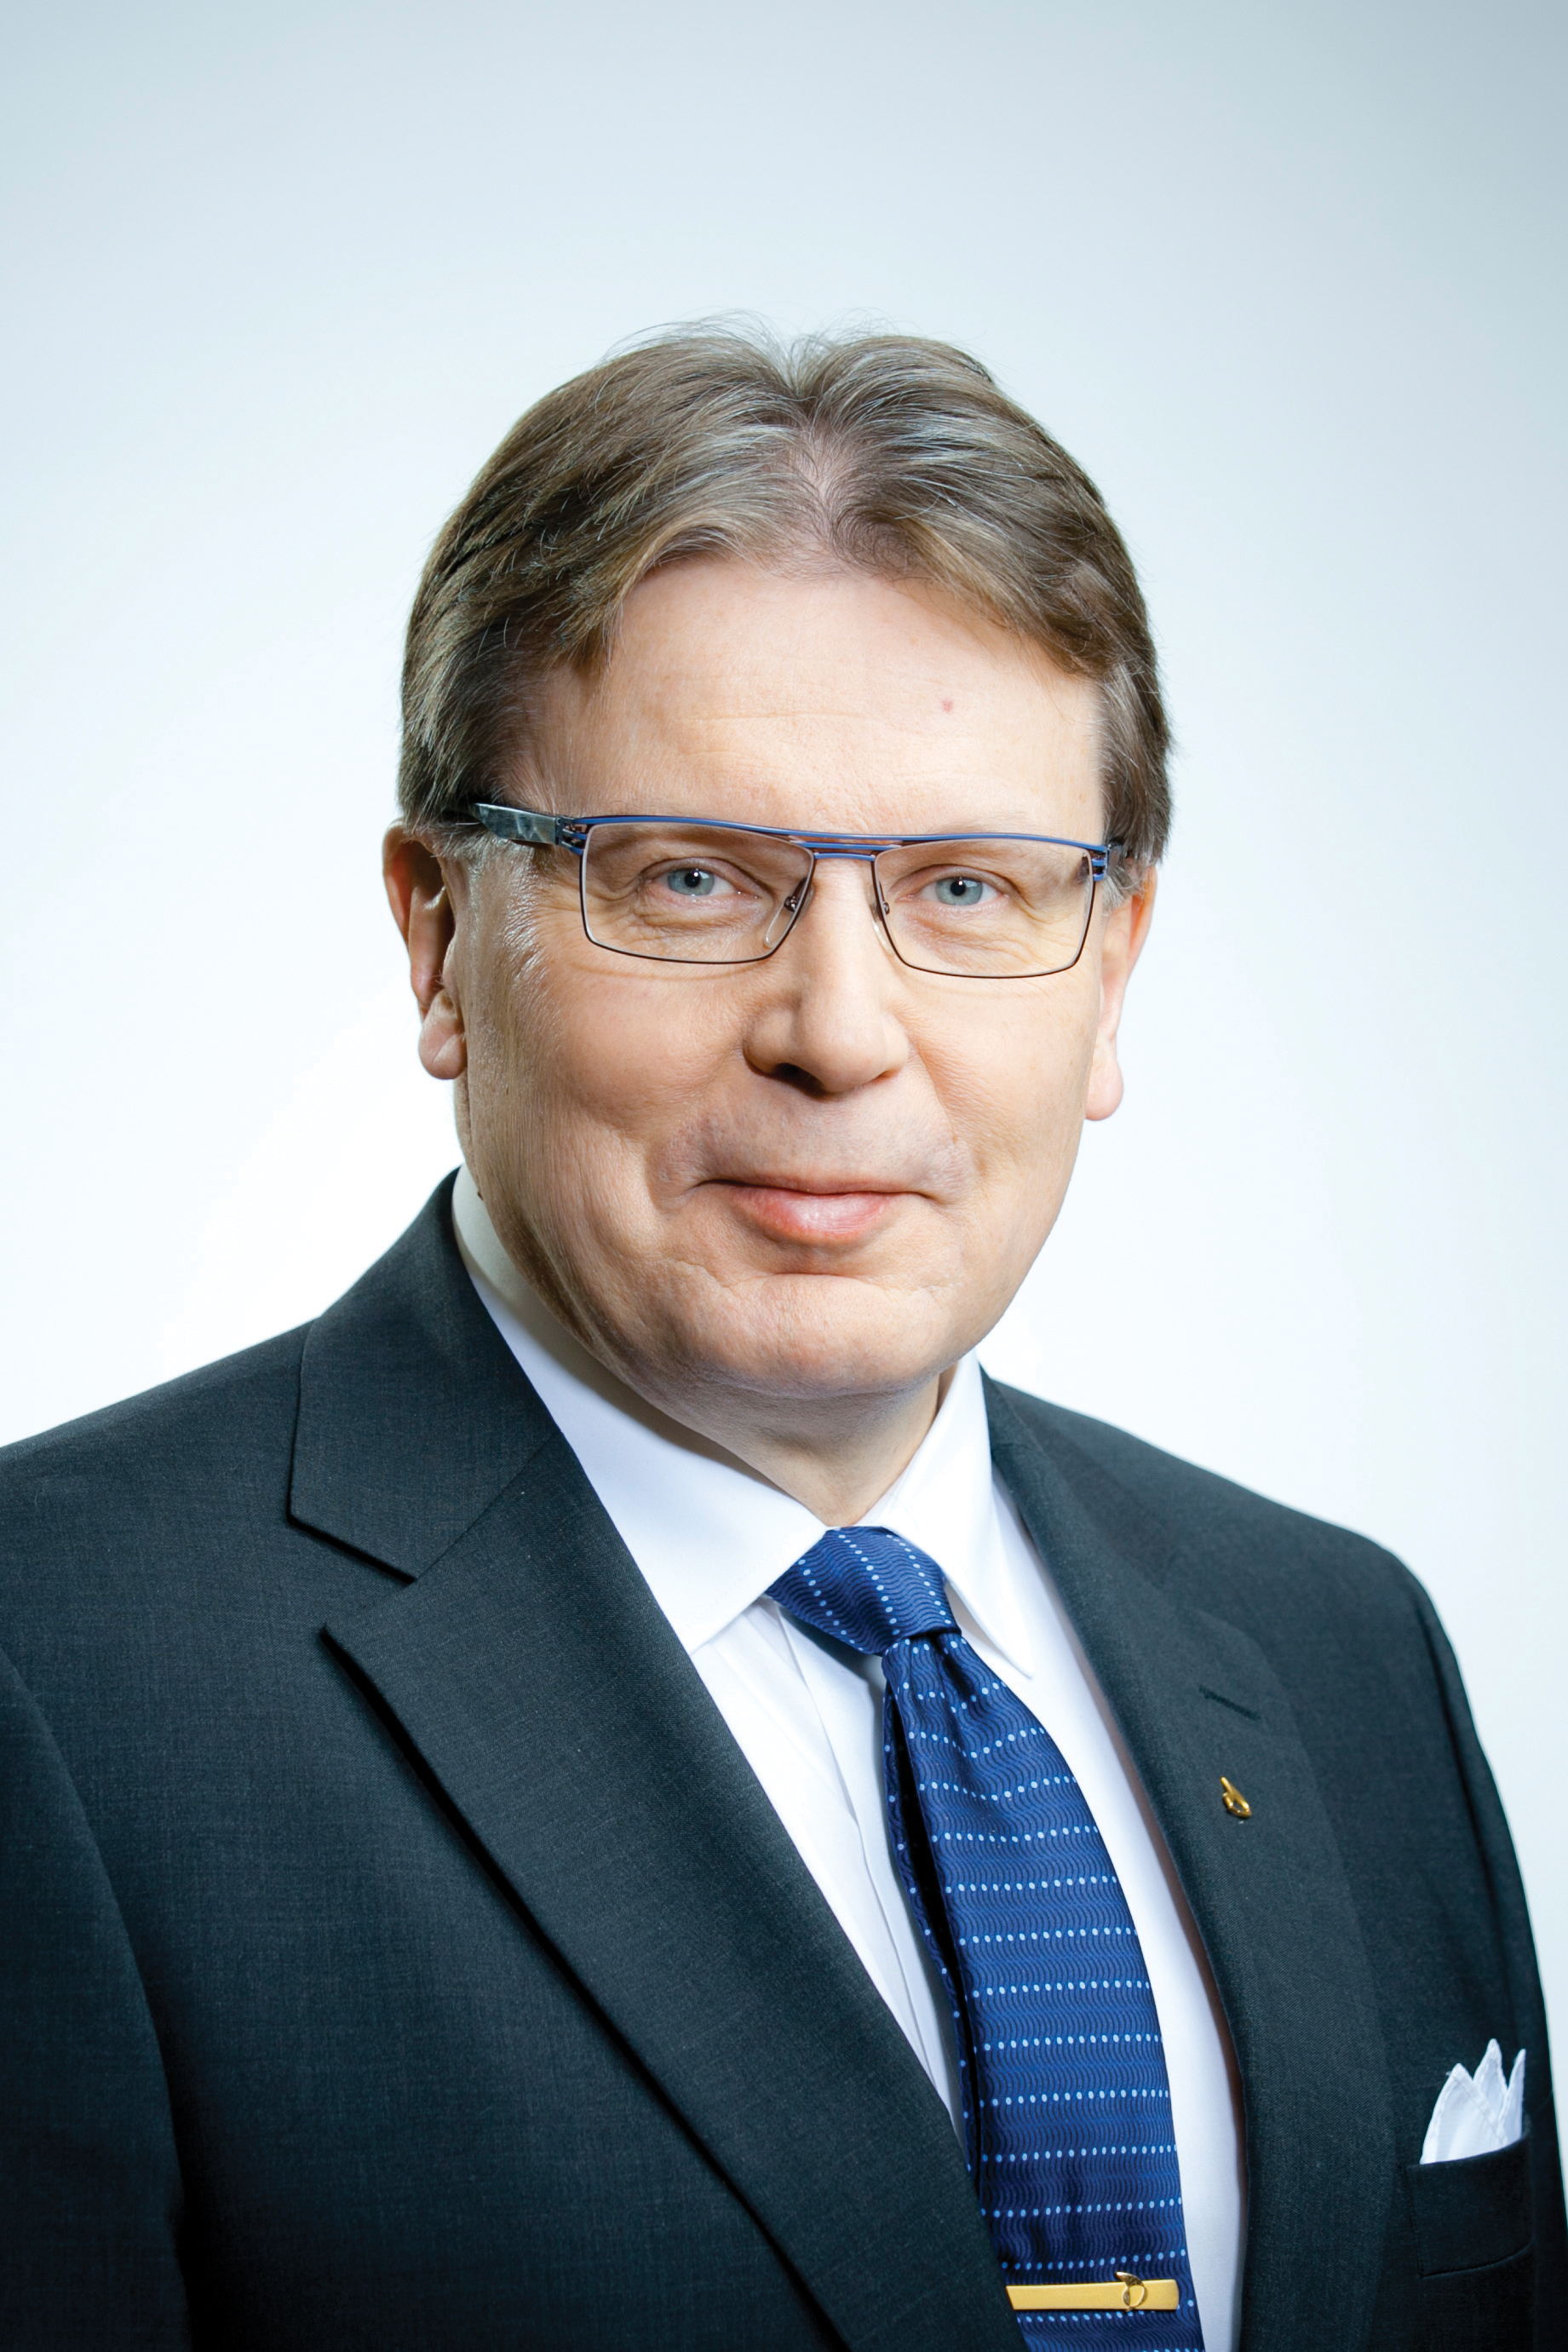 Metso CEO and president Matti Kahkonen